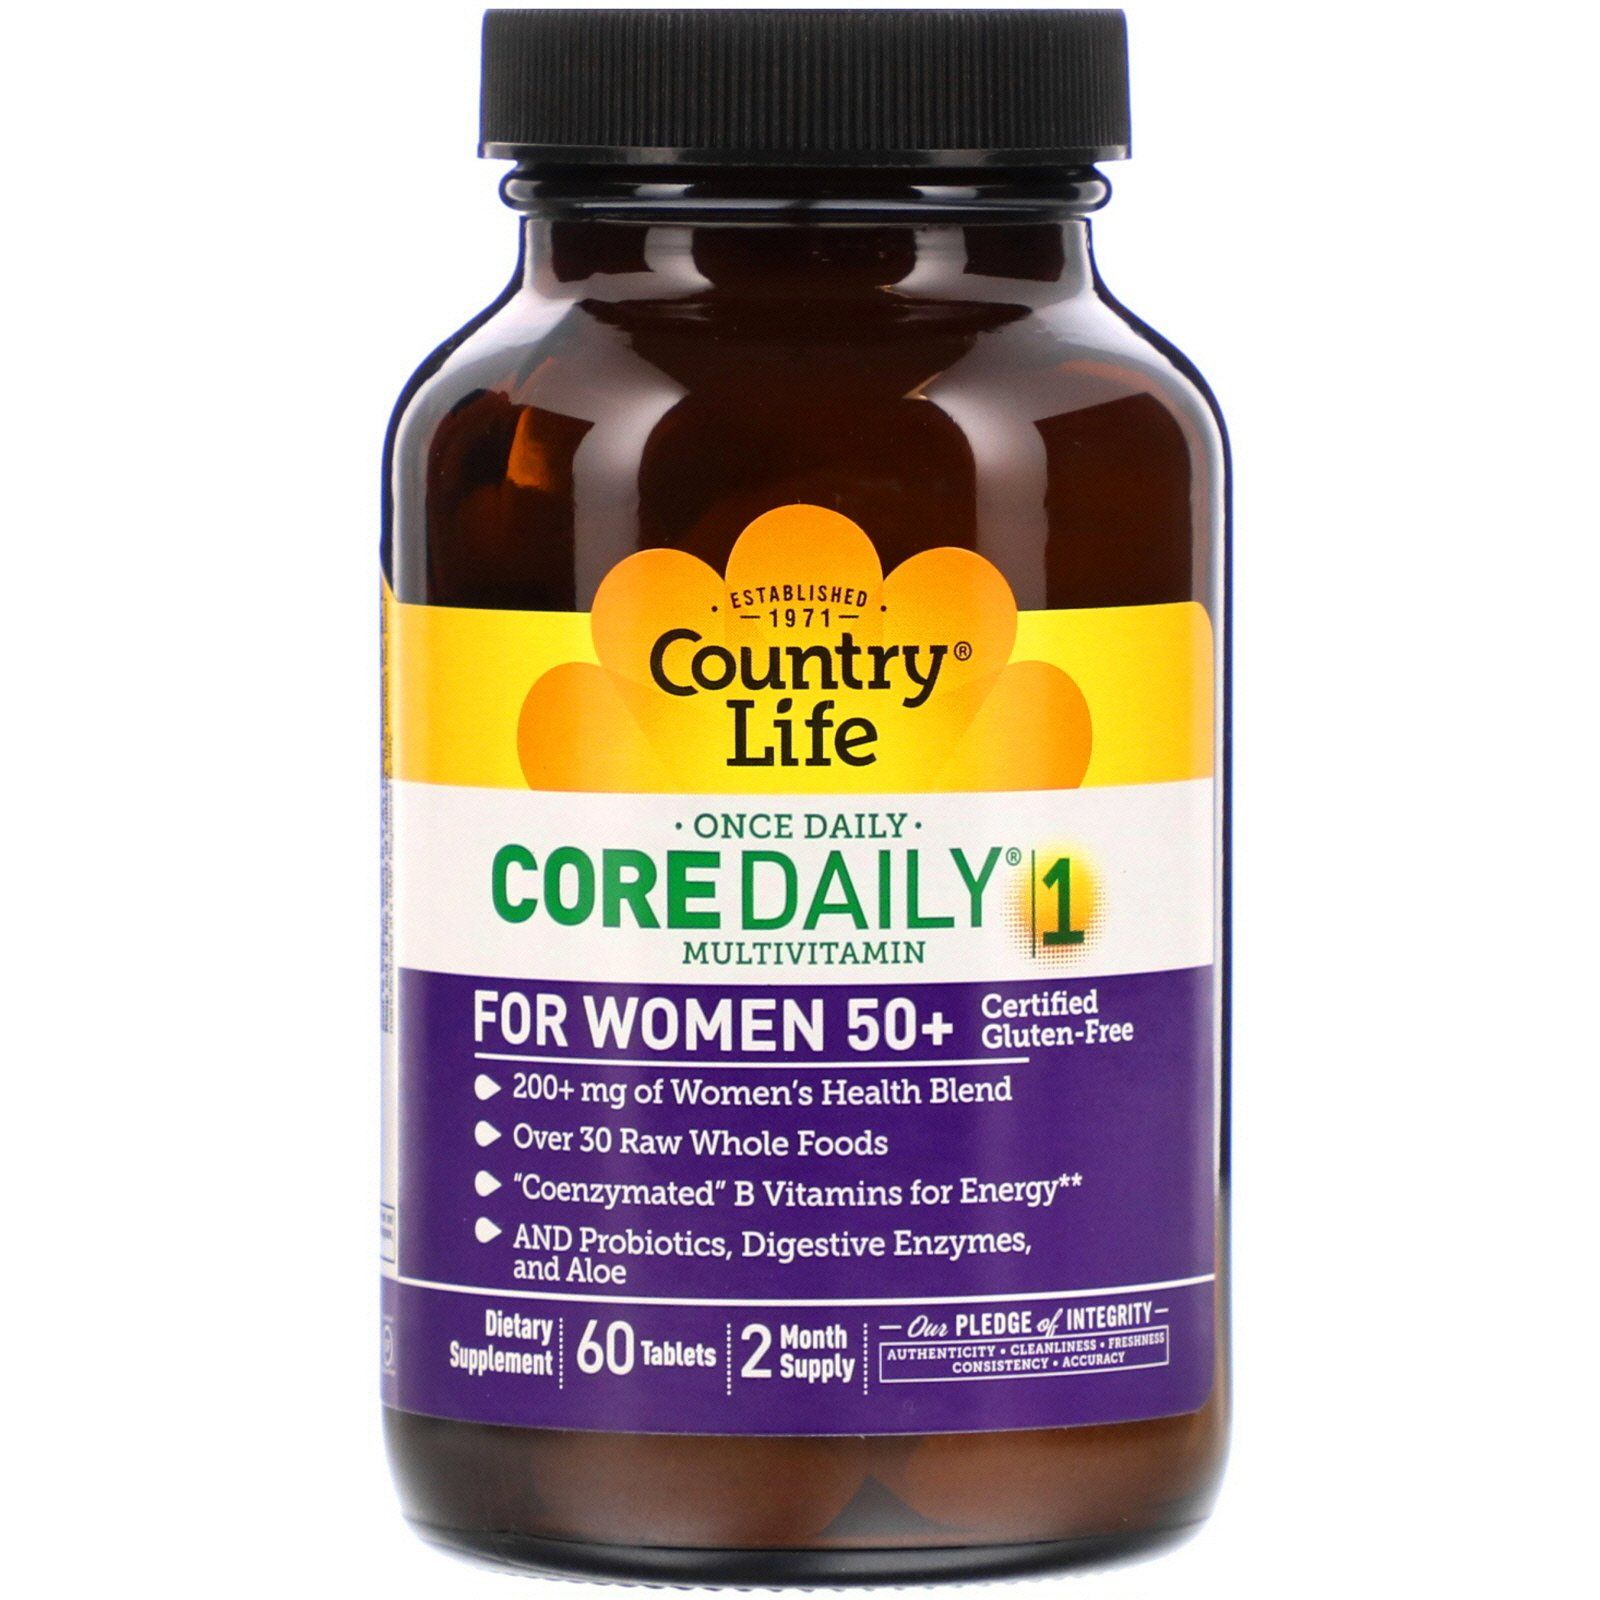 Витамины при менопаузе 50. Country Life Core Daily-1 Multivitamin for women 50+. Country Life, мультивитамины Core Daily-1 (women). One Daily Multivitamin women 50+. Country Life, Core Daily-, мультивитамины для мужчин.